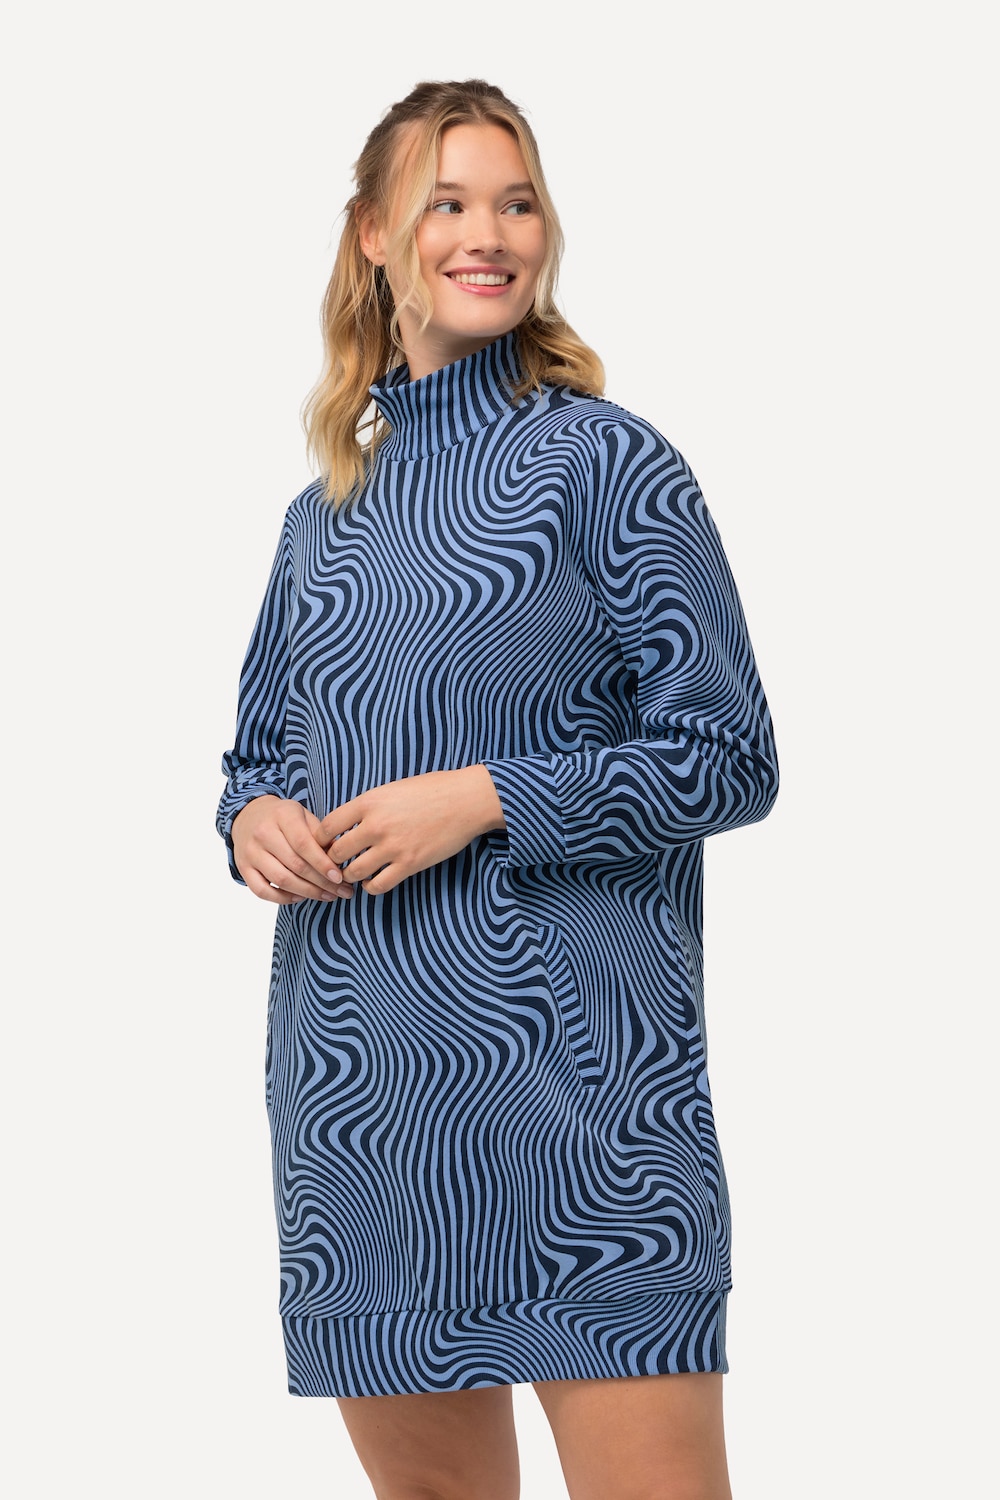 Grote Maten Loungewear jurk, Dames, blauw, Maat: 46/48, Katoen/Polyester, Ulla Popken